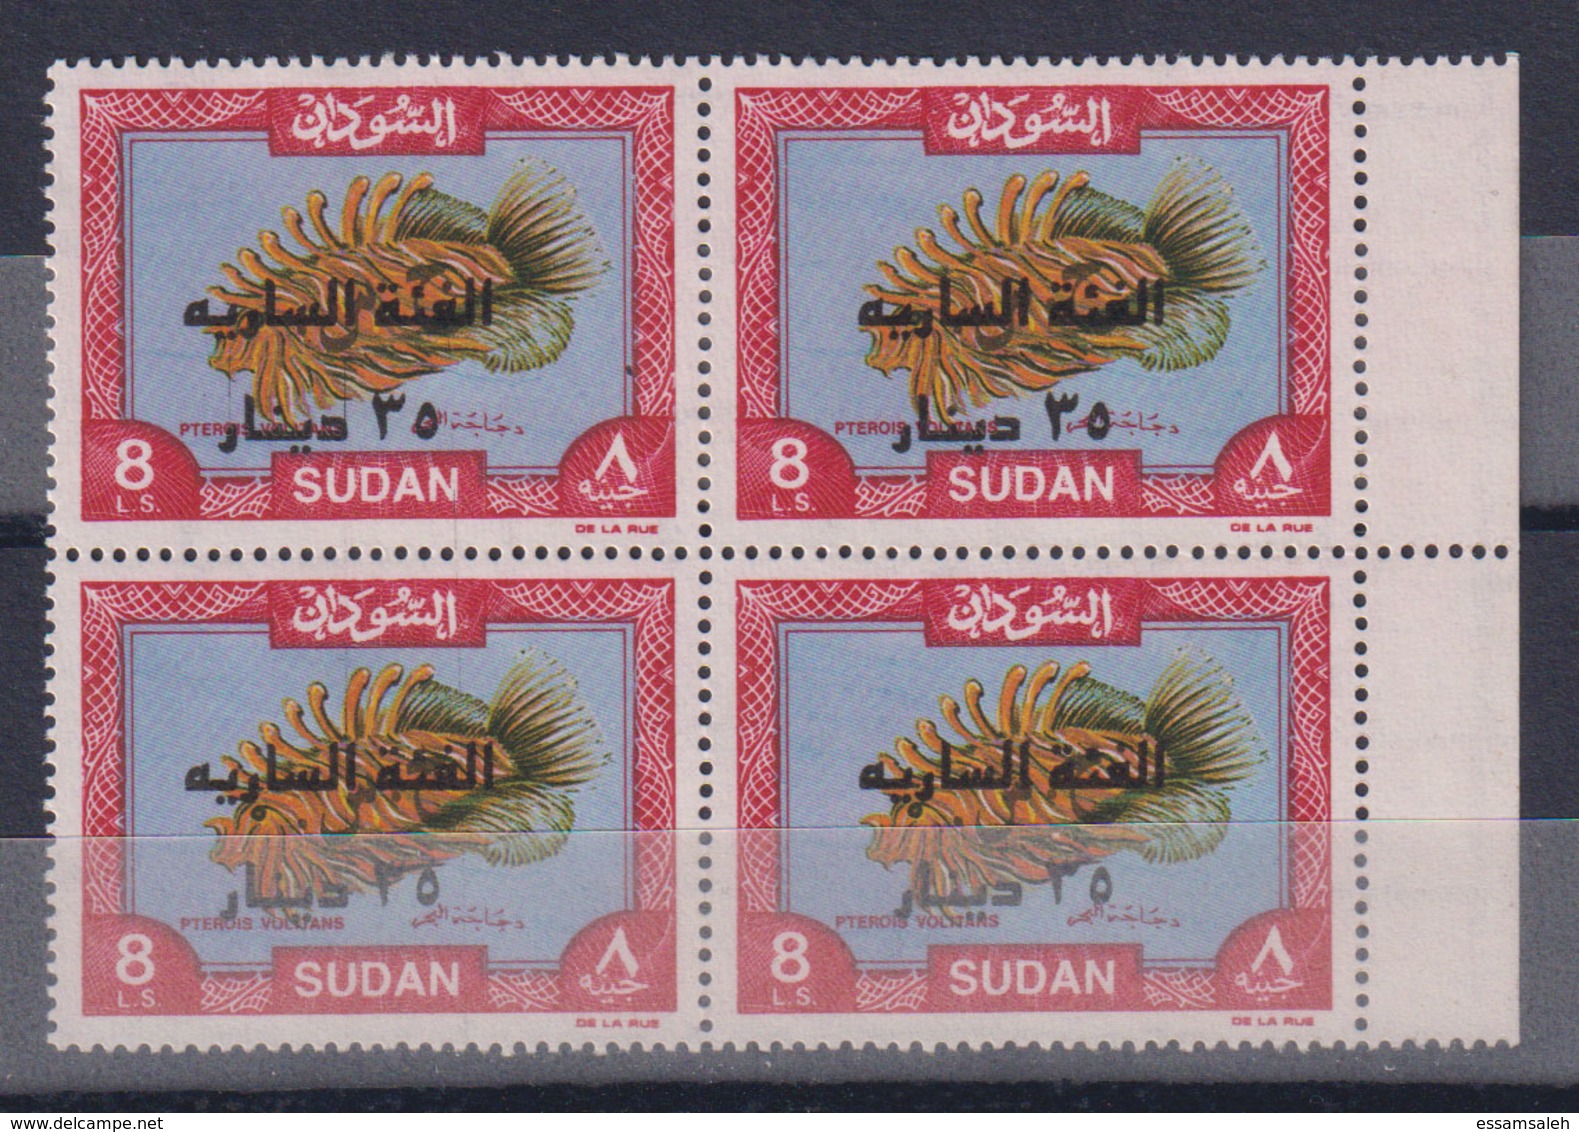 SDS05462 Sudan 1992-97 35 Dinar Overprint 8 Pounds Lionfish / Margin Block Of 4 Stamps /MNH - Sudan (1954-...)